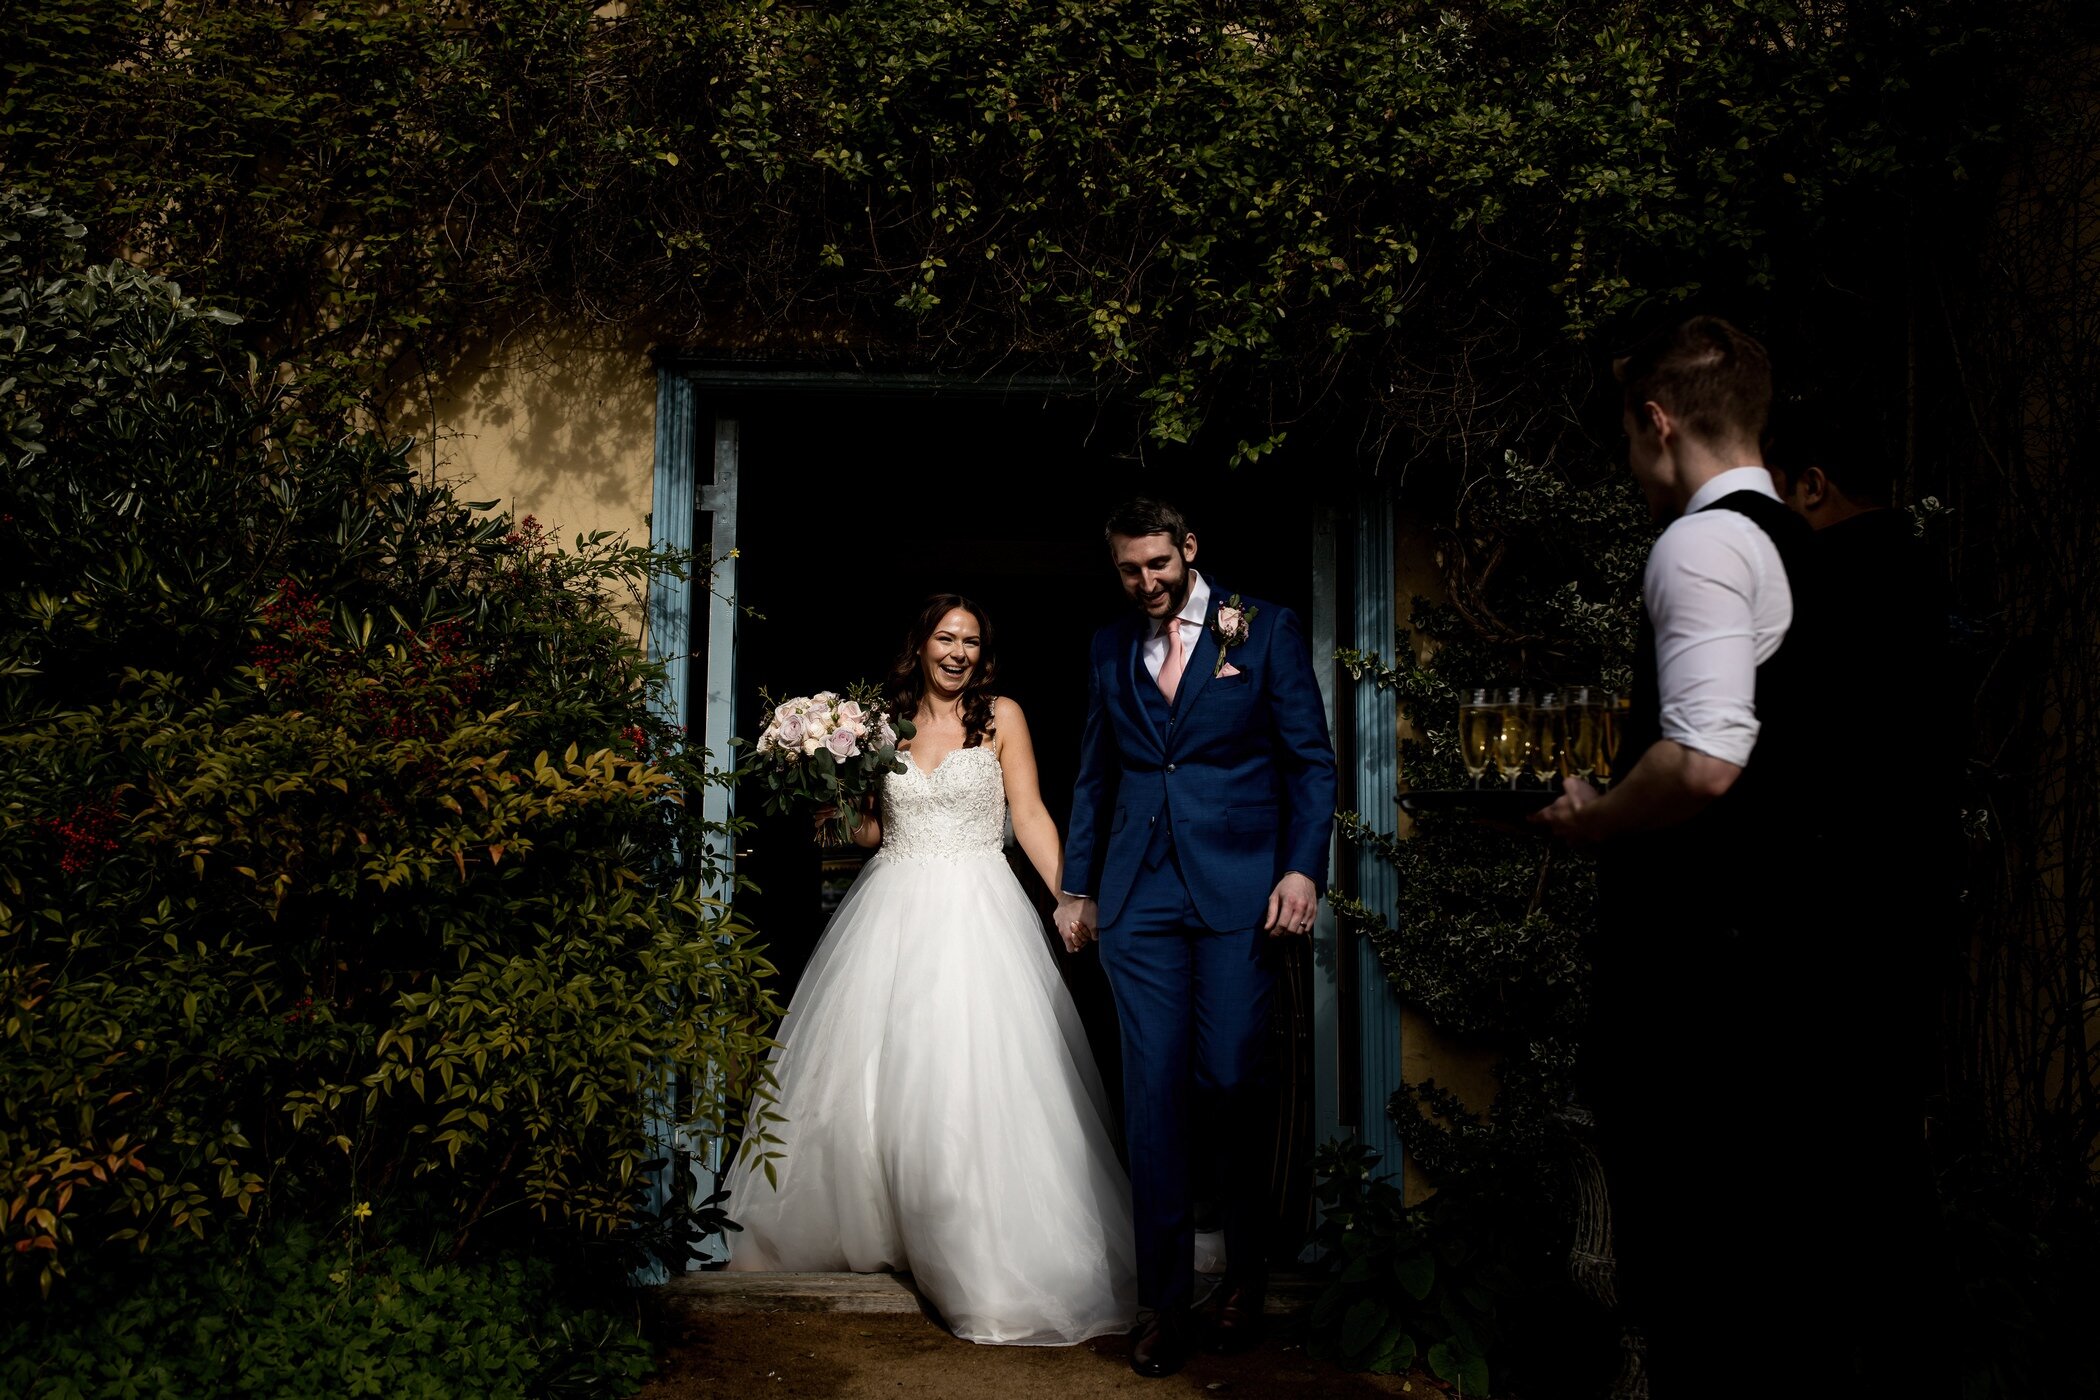 south farm wedding hertfordshire wedding photographer rafe abrook photography-1129.jpg